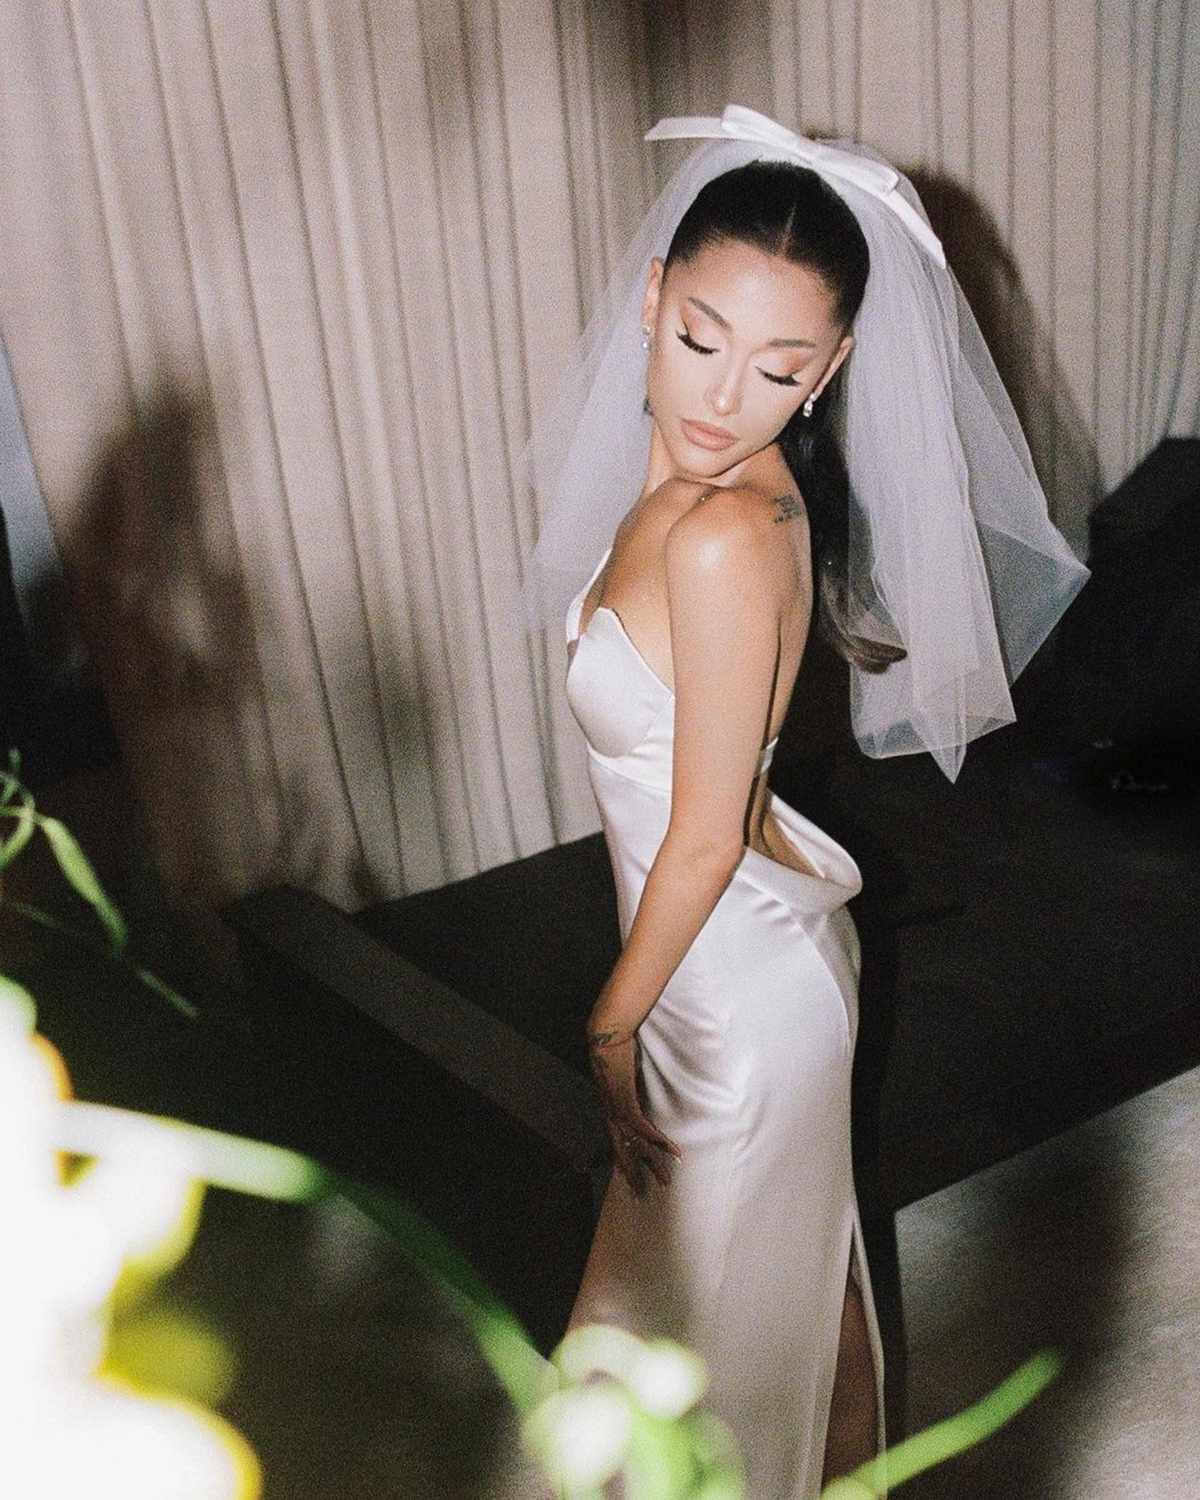 Gets Married in Vera Wang Wedding Dress ...